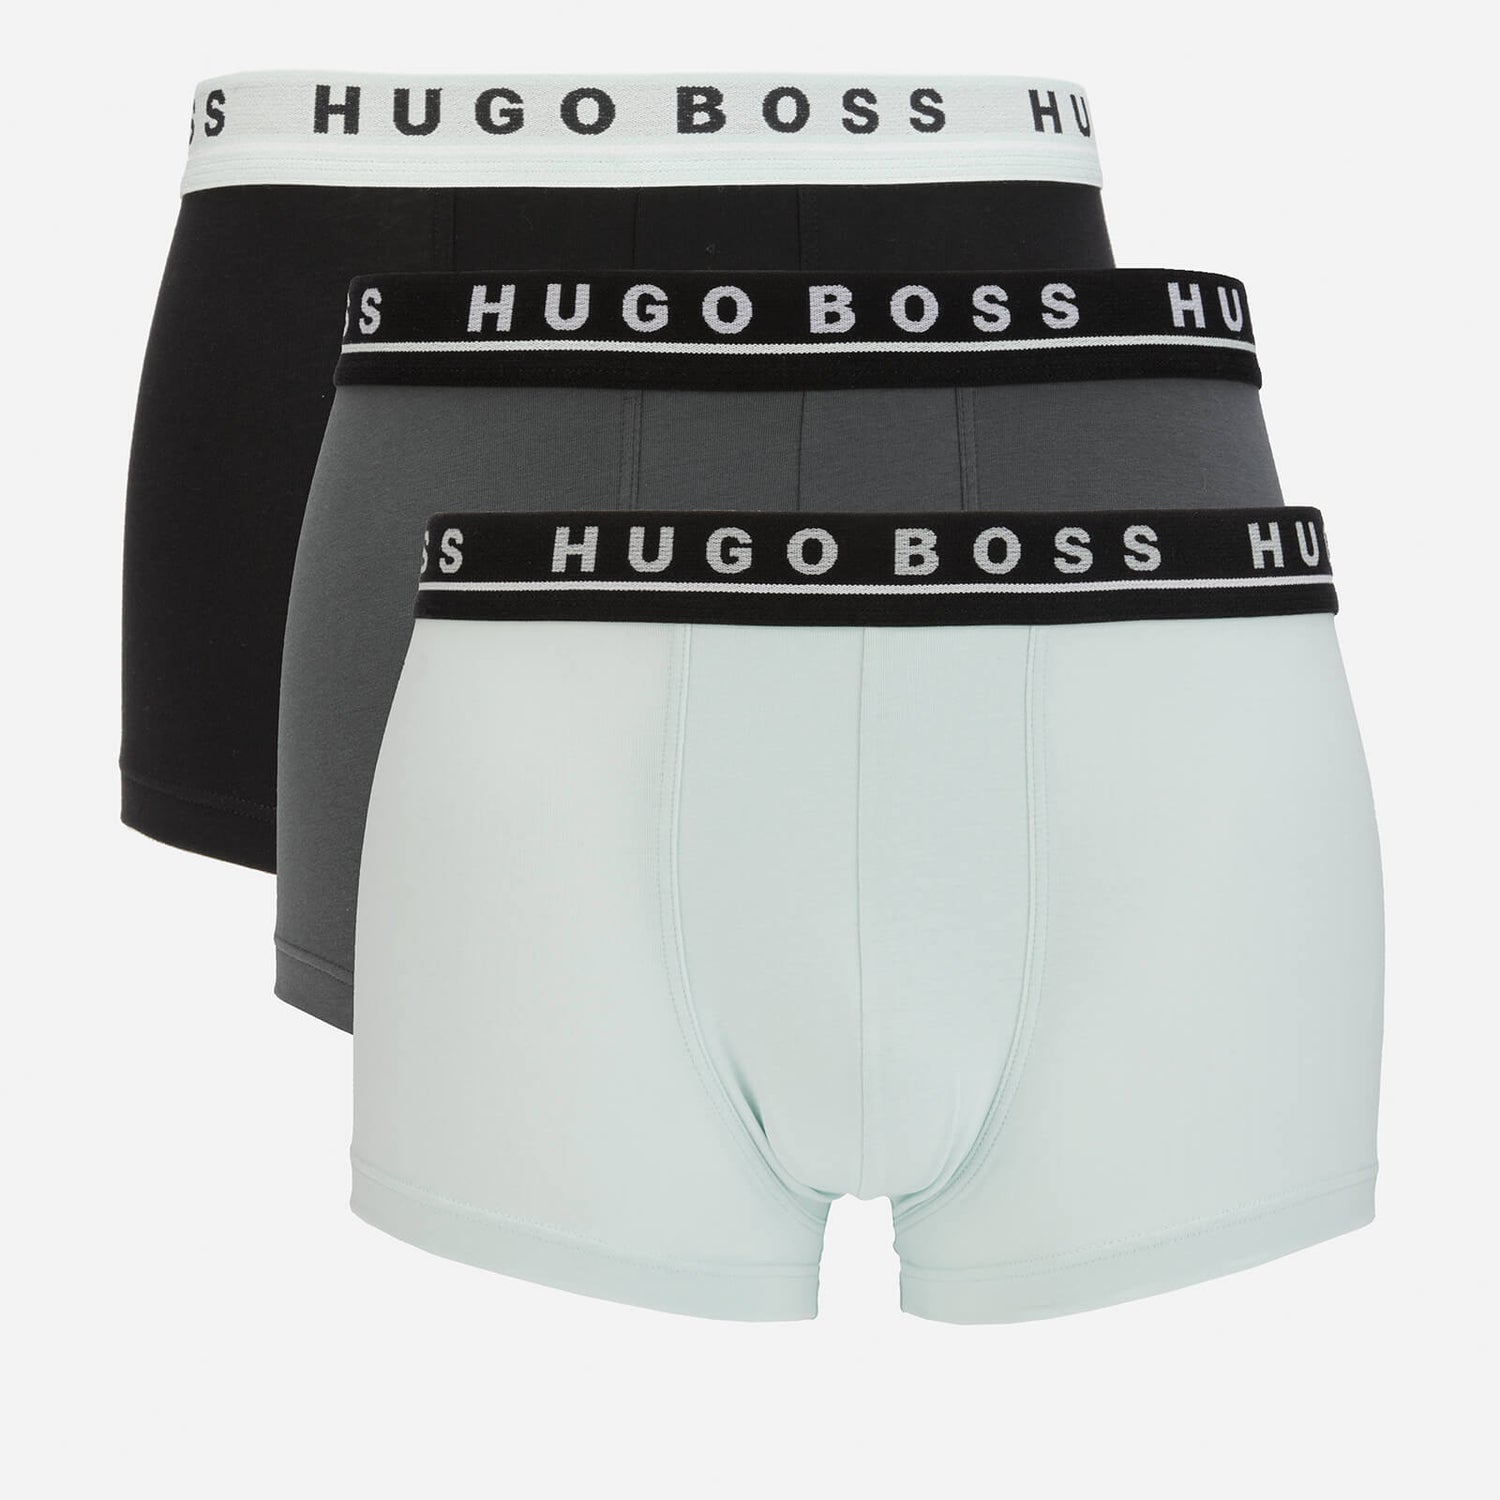 BOSS Bodywear Men's 3 Pack Trunk Boxer Shorts - Grey/Black/Mint ...